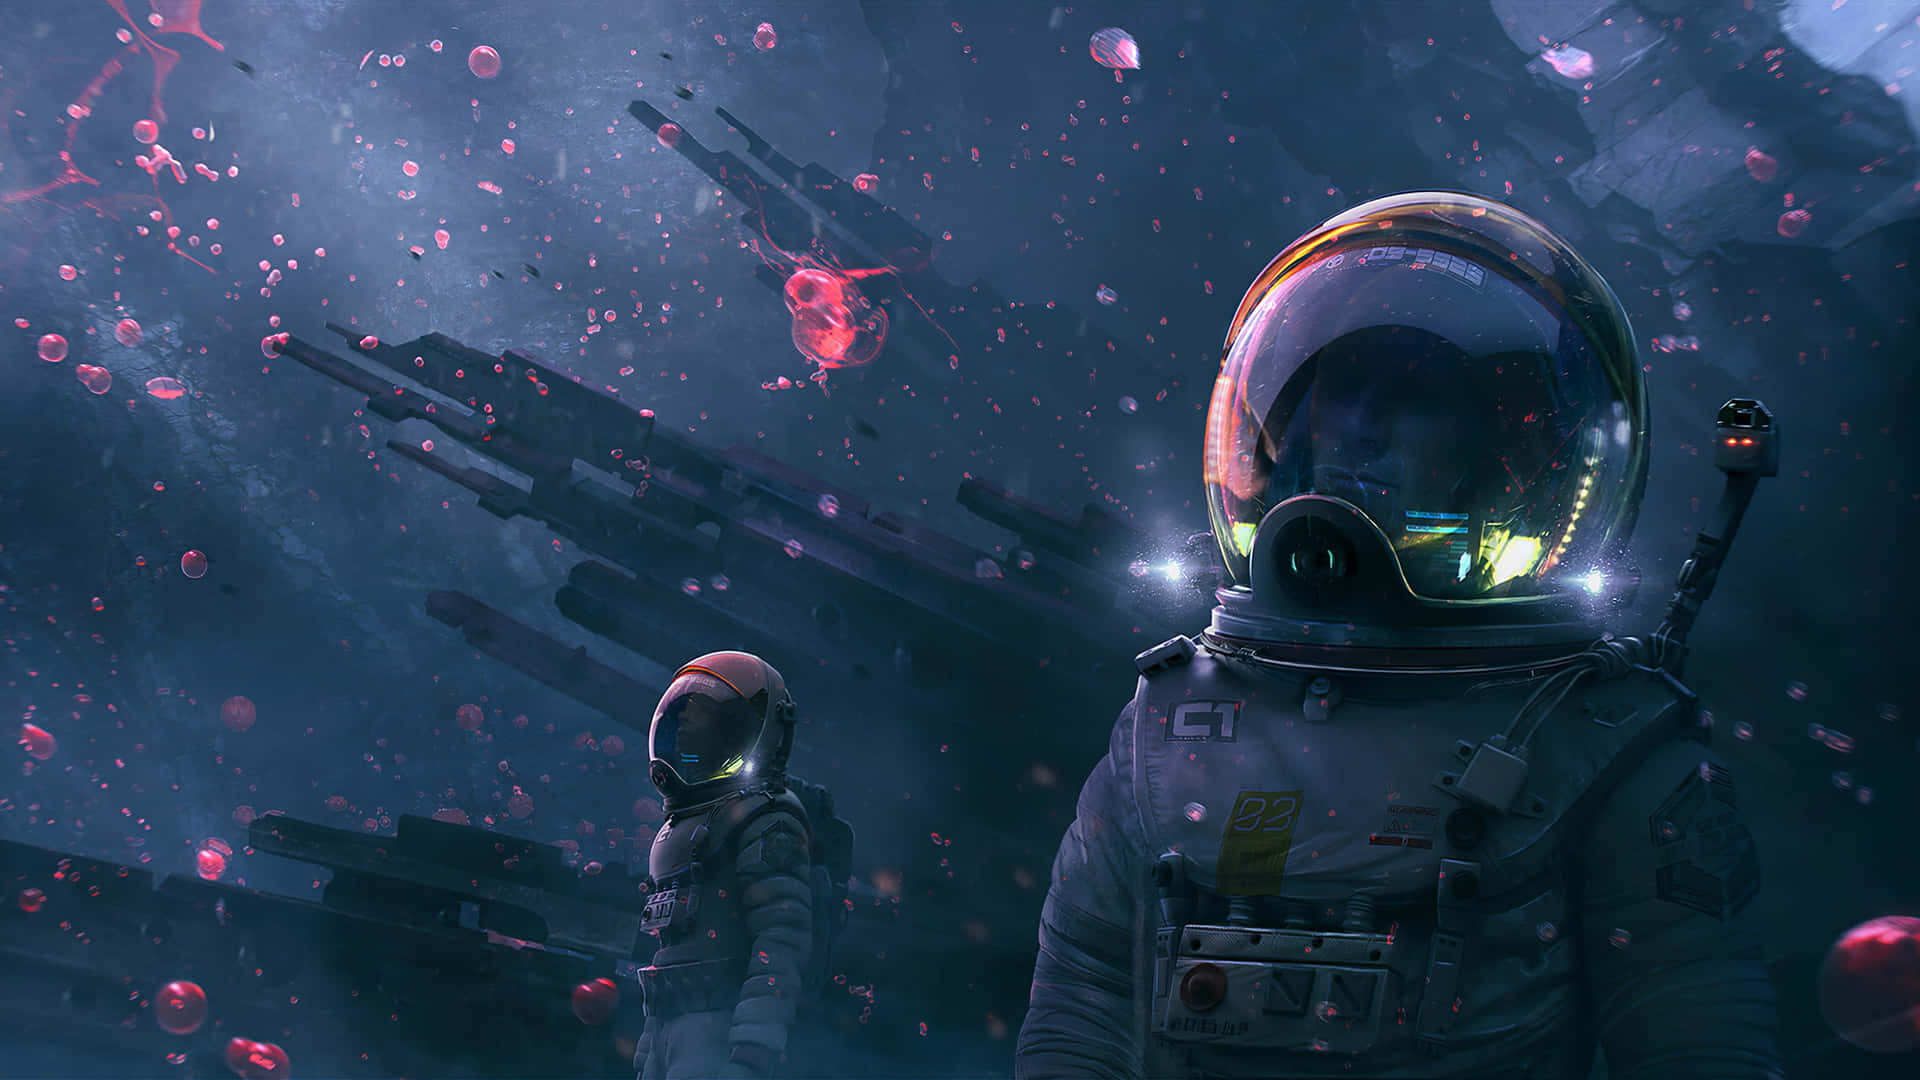 1440p Space Astronaut Digital Art Wallpaper